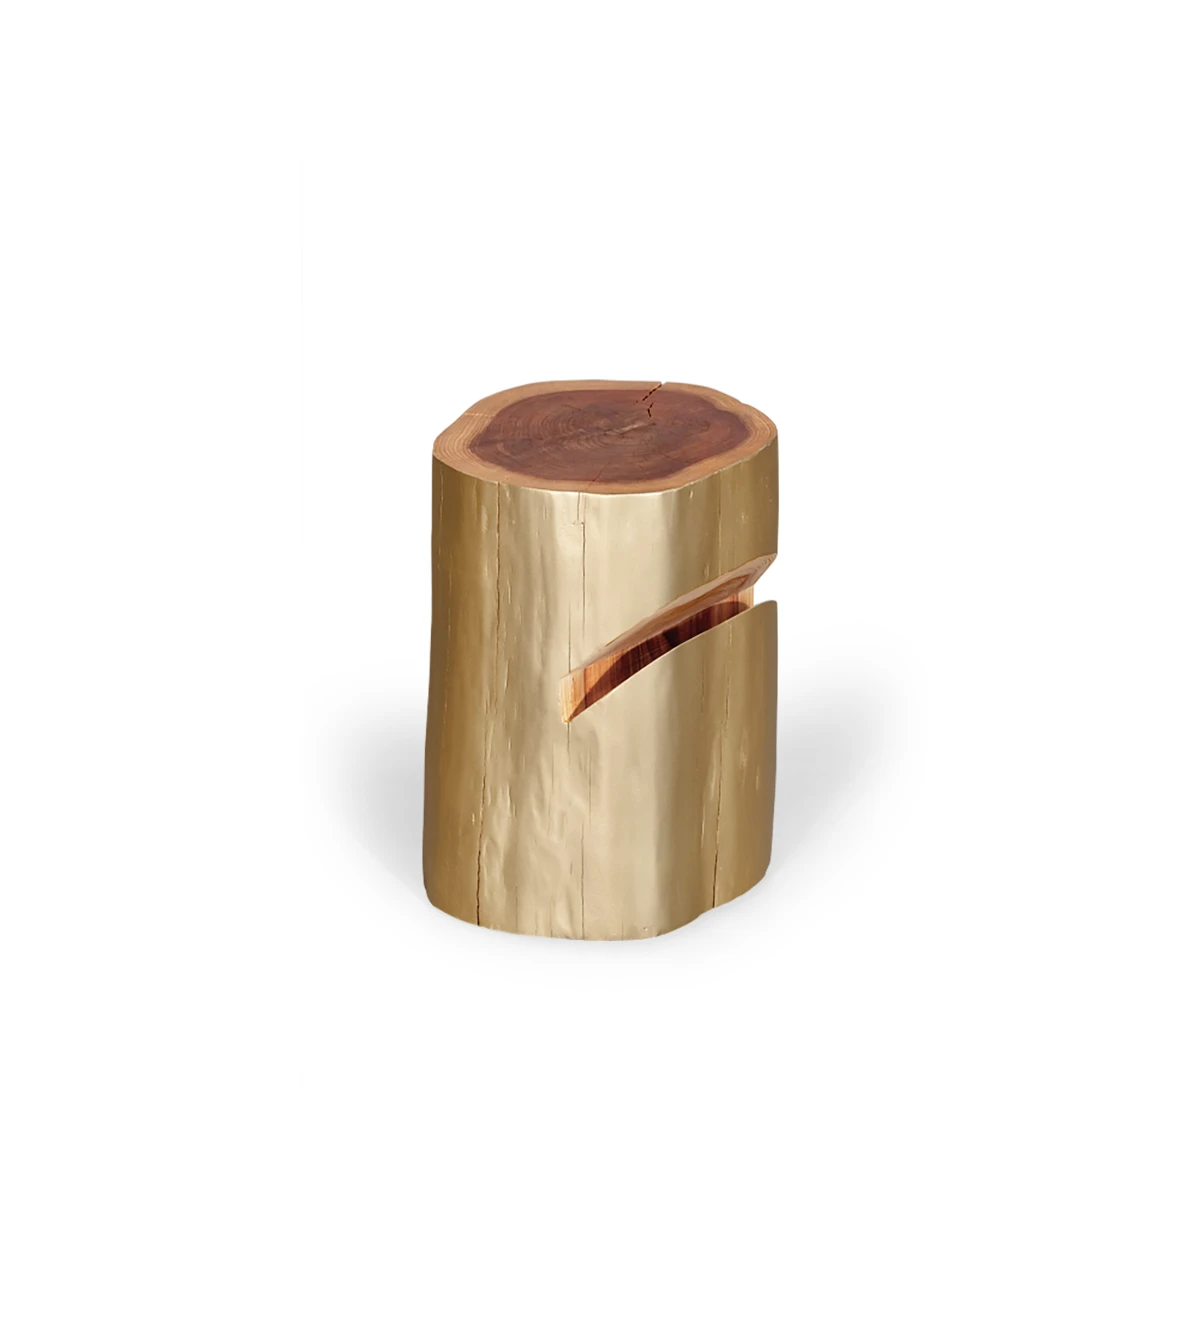 Table de chevet en bois naturel de cryptomeria laqué or.